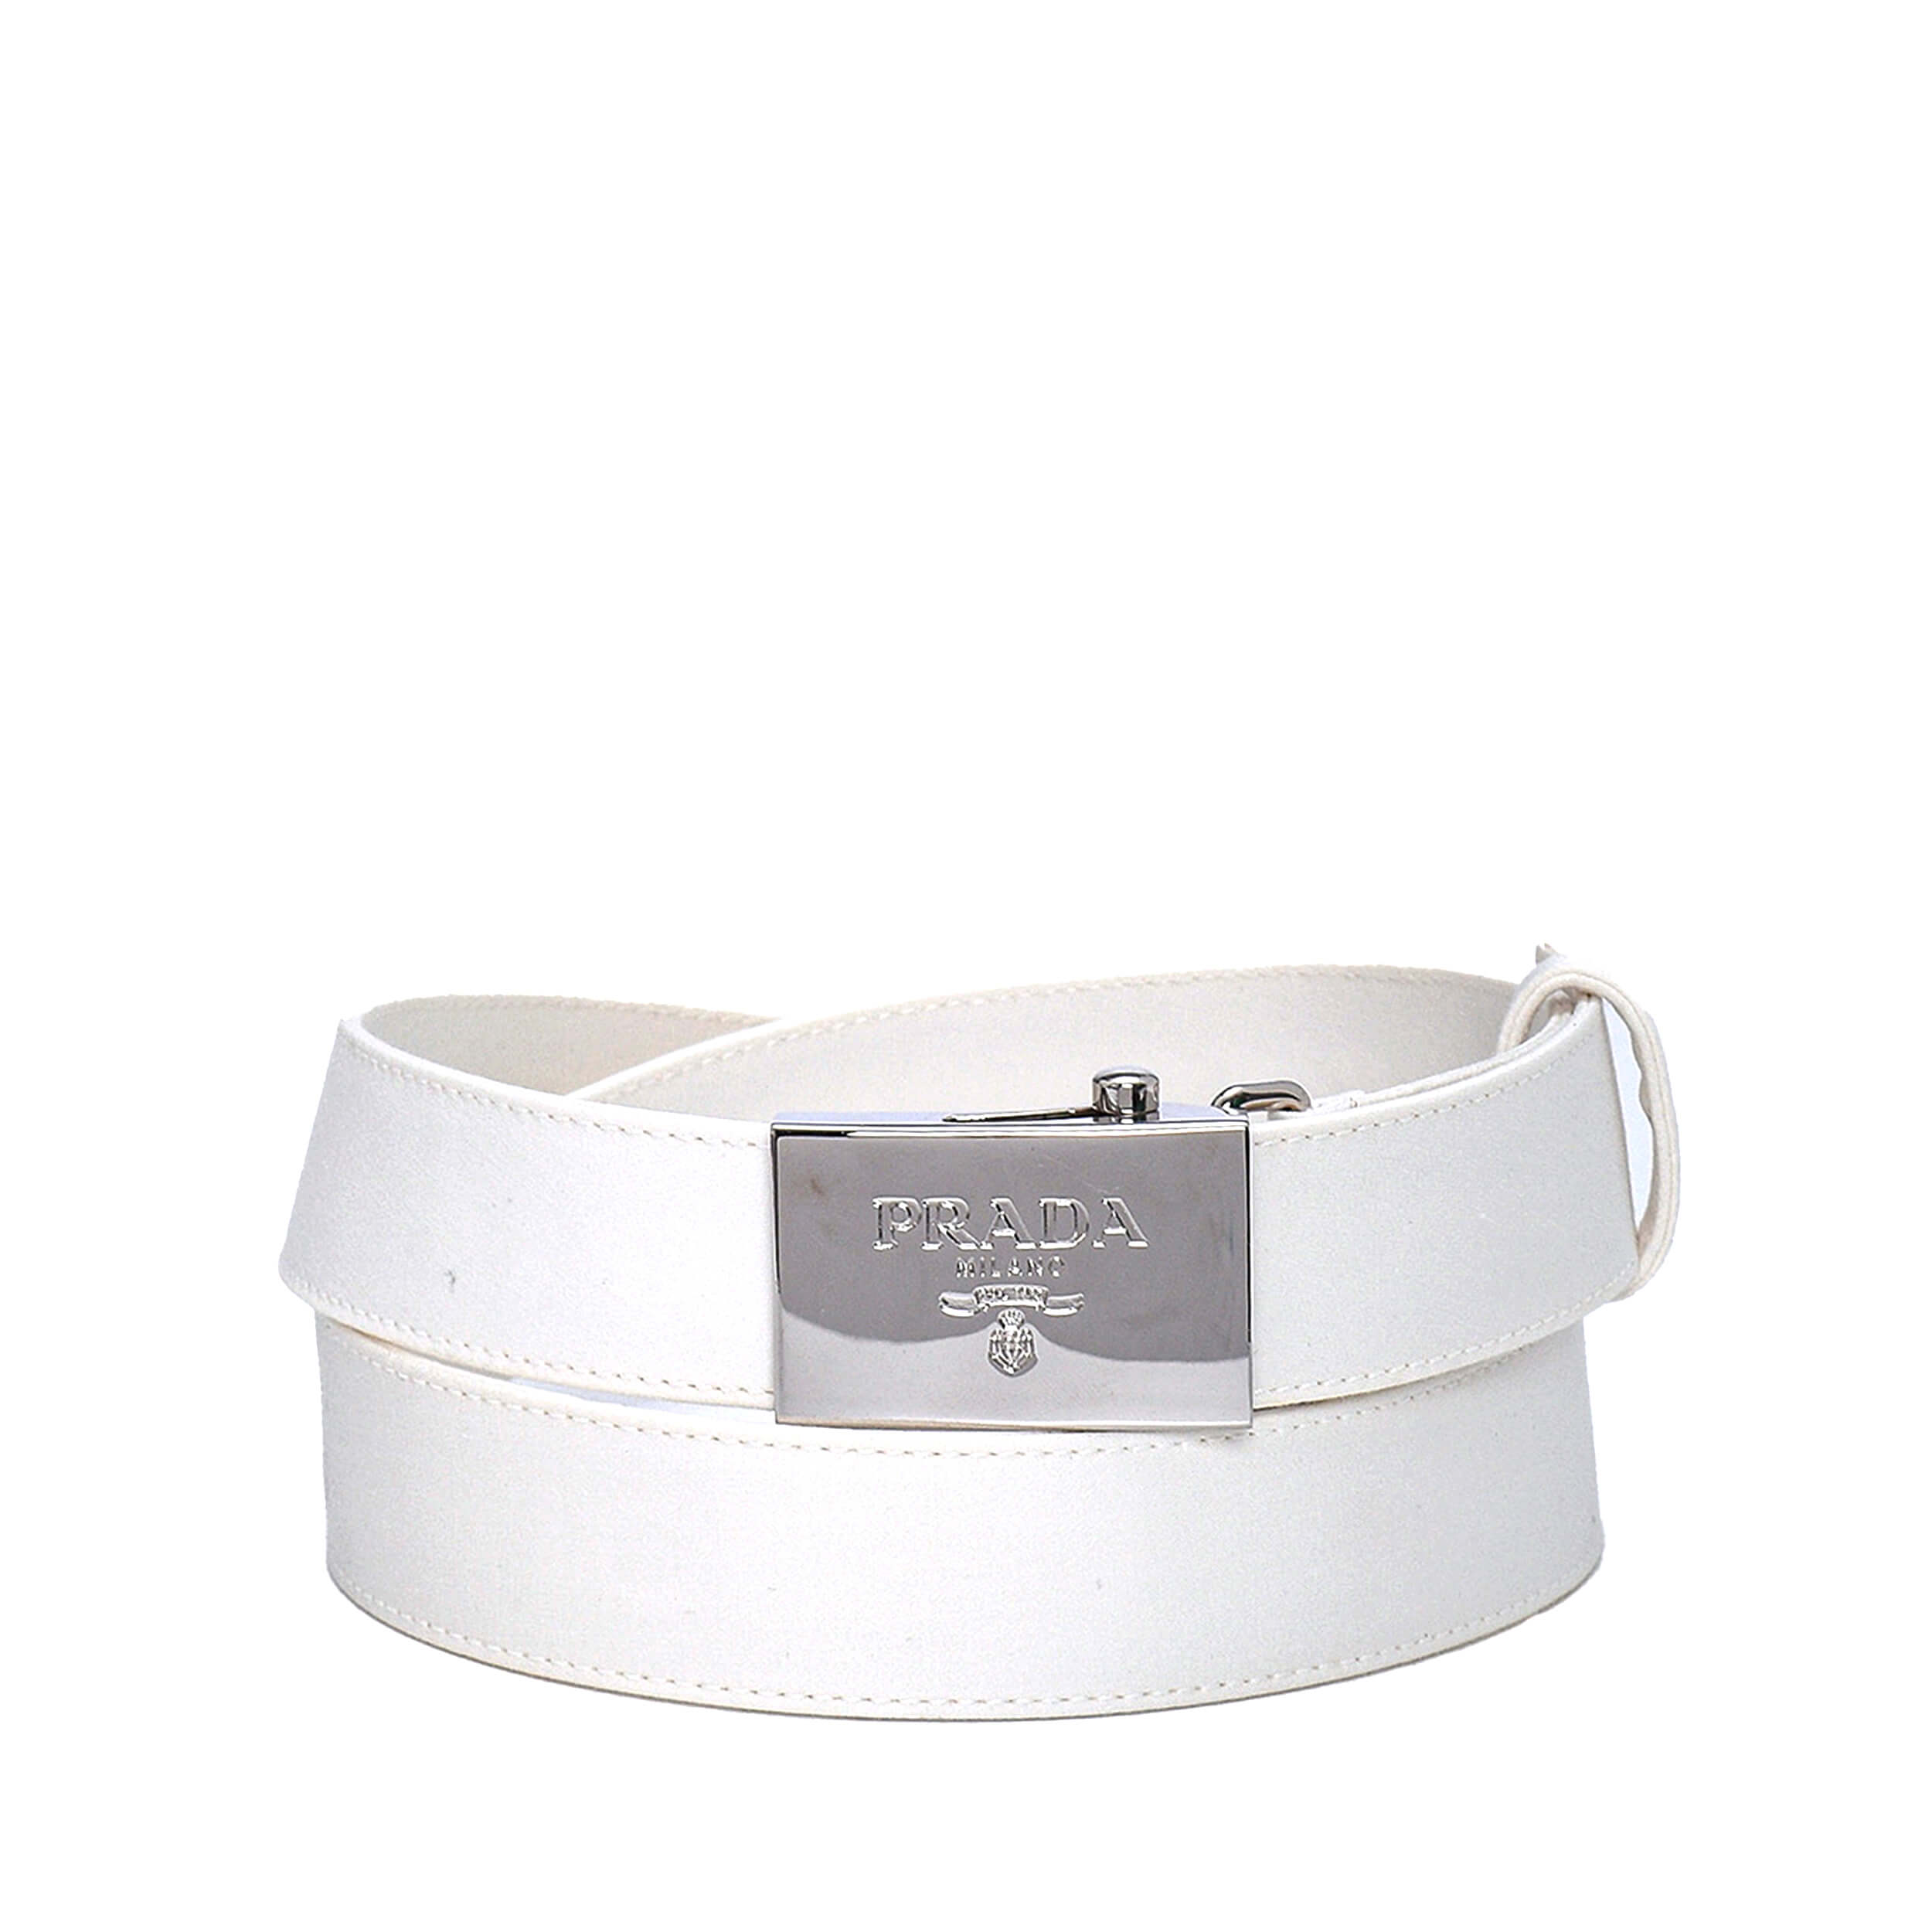 Prada - White Canvas &Silver Plaka Belt